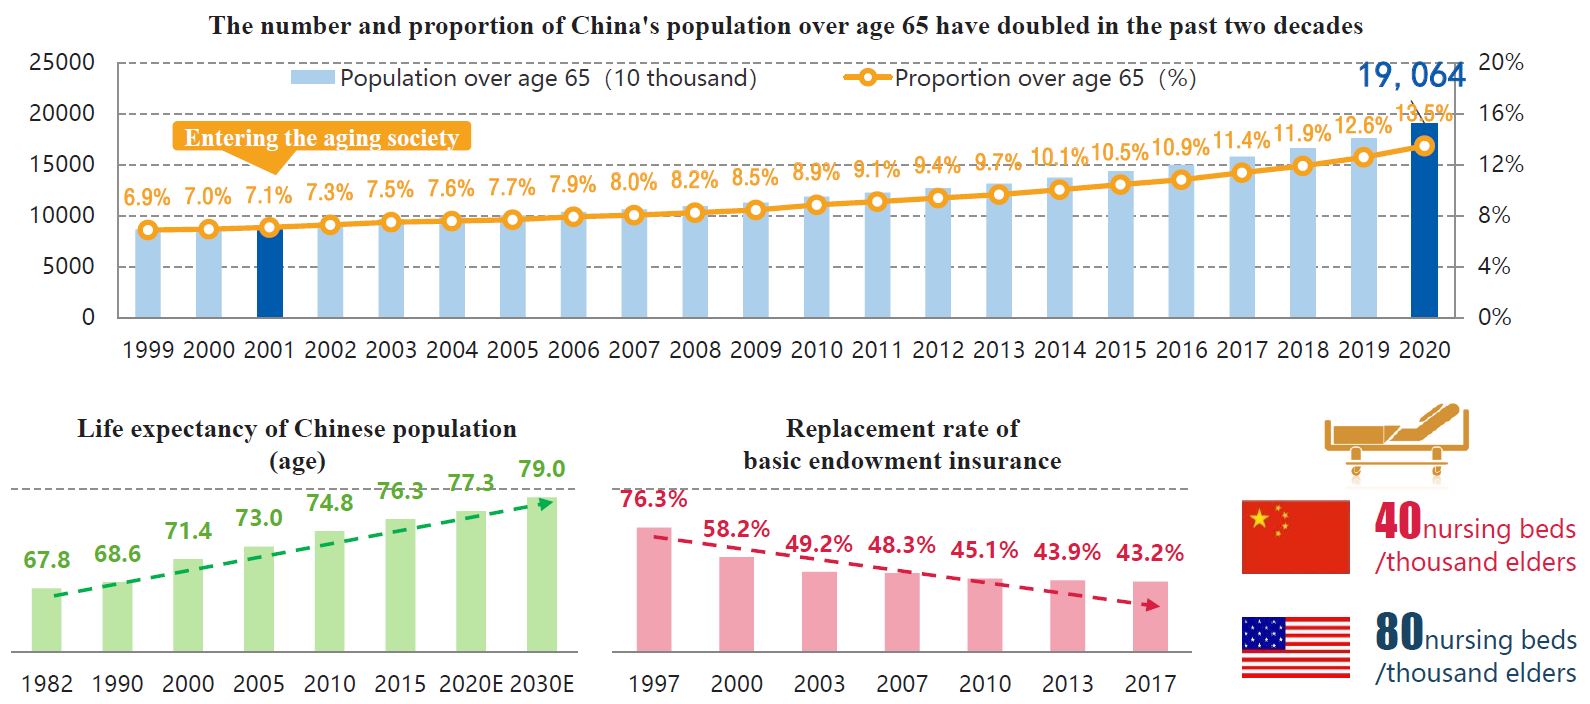 China population over 65